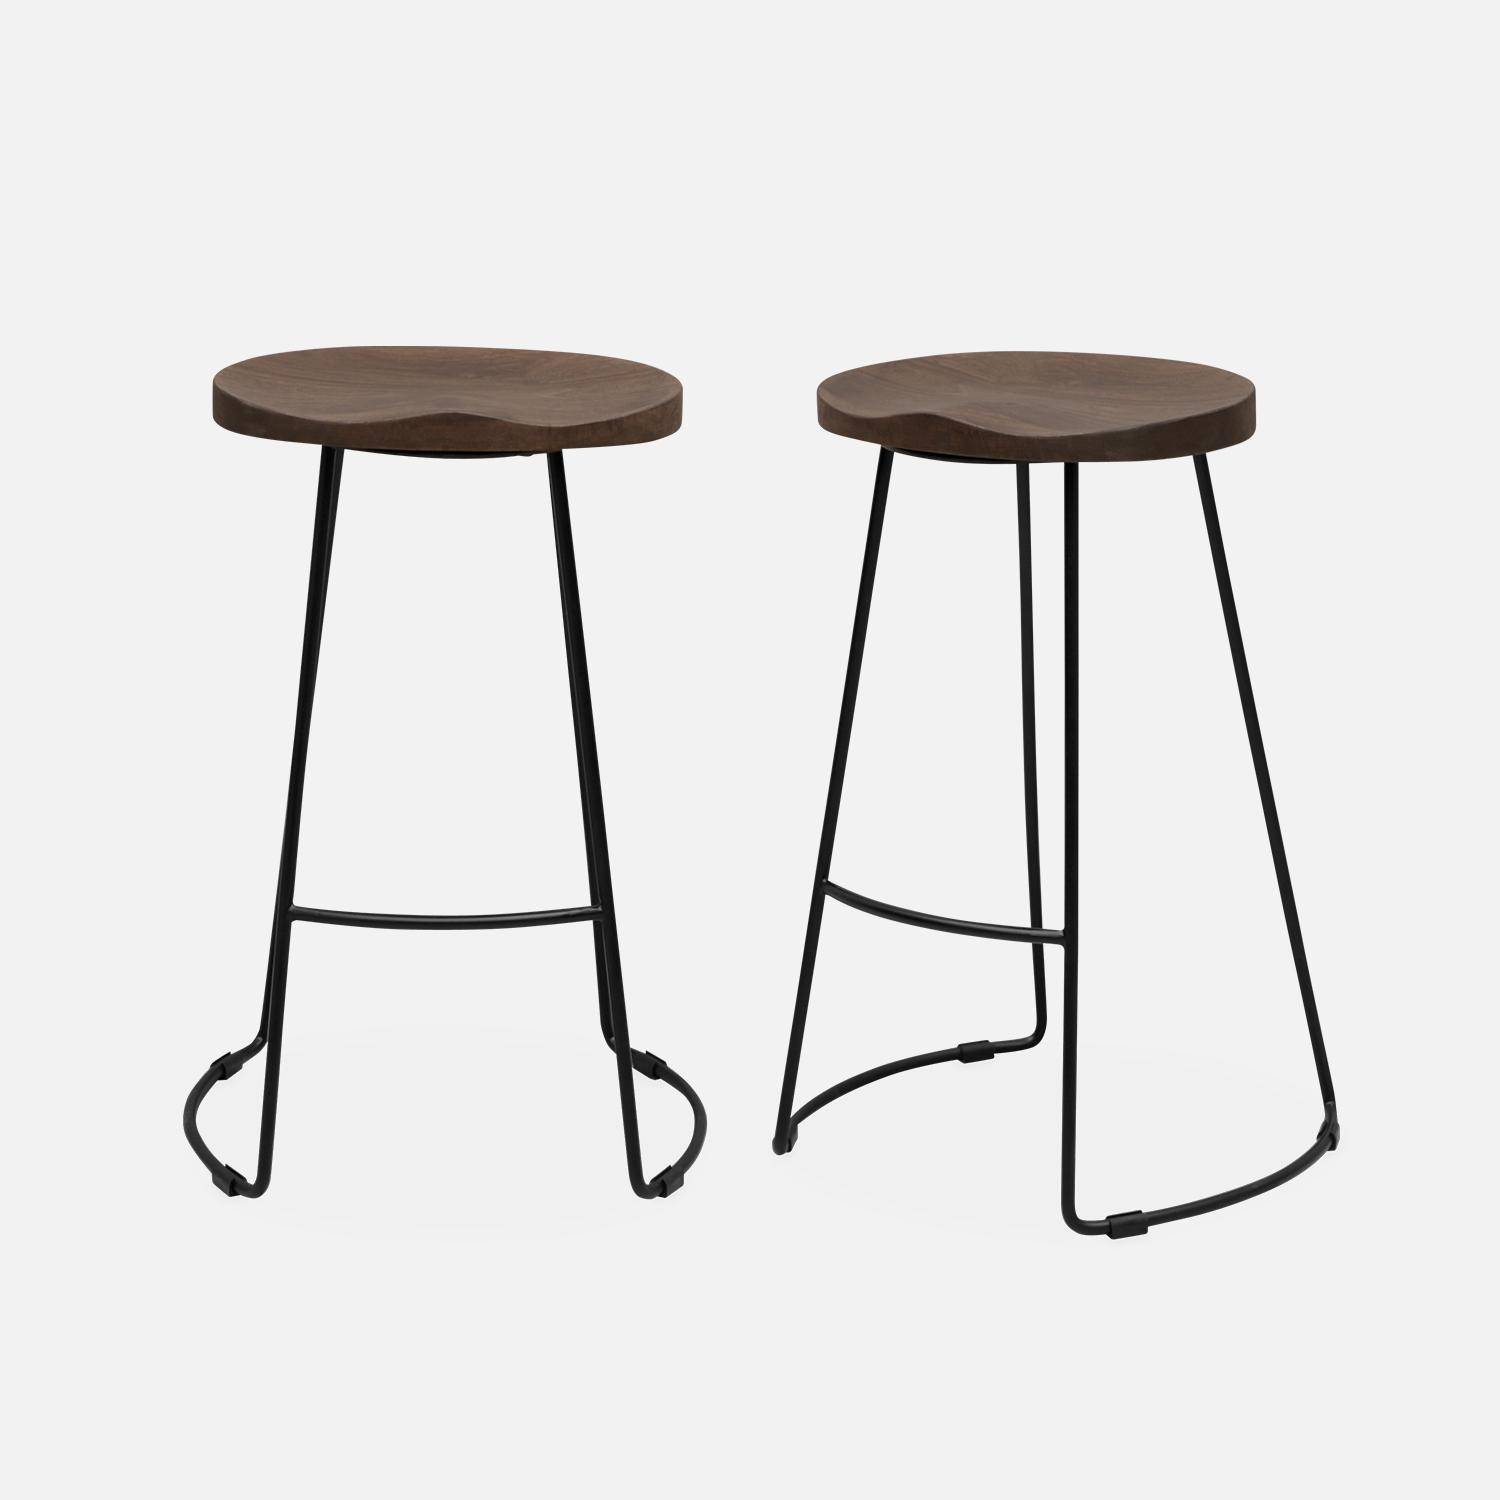 Pair of industrial metal and wooden bar stools, 44x36x65cm, Jaya, Light Walnut, Mango wood seat, black metal legs,sweeek,Photo4